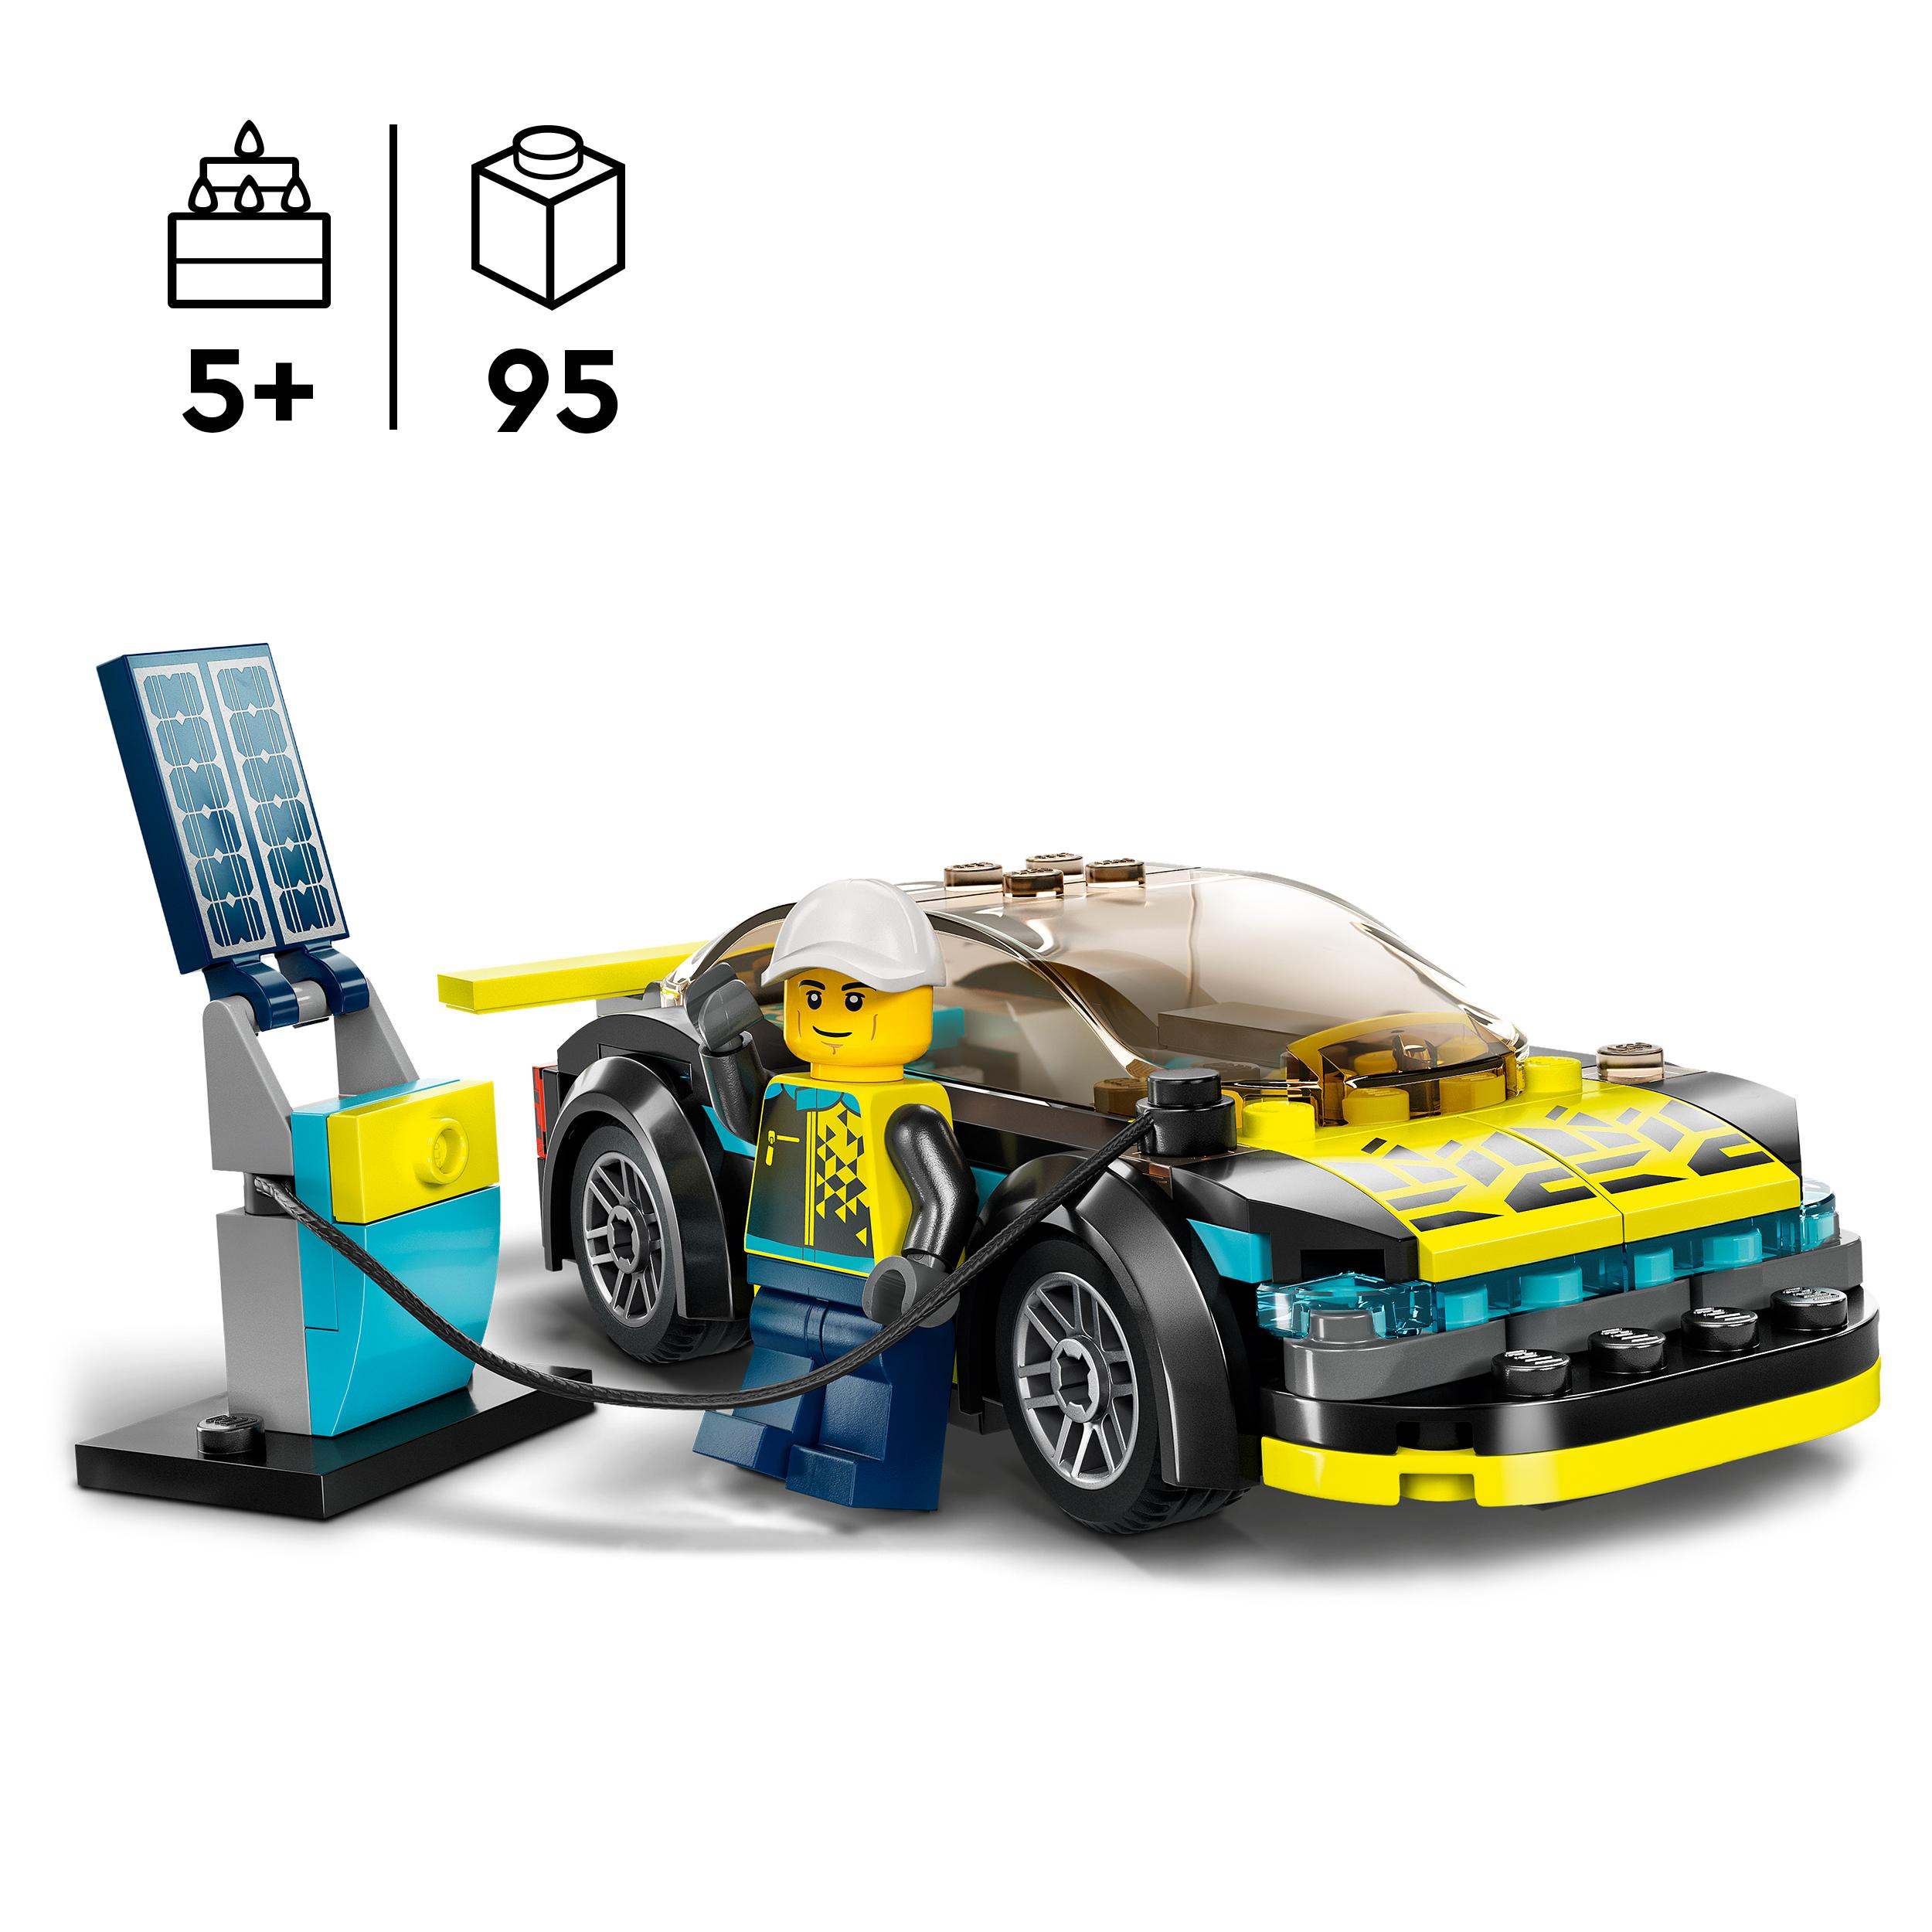 LEGO City 60383 Bausatz, Elektro-Sportwagen Mehrfarbig